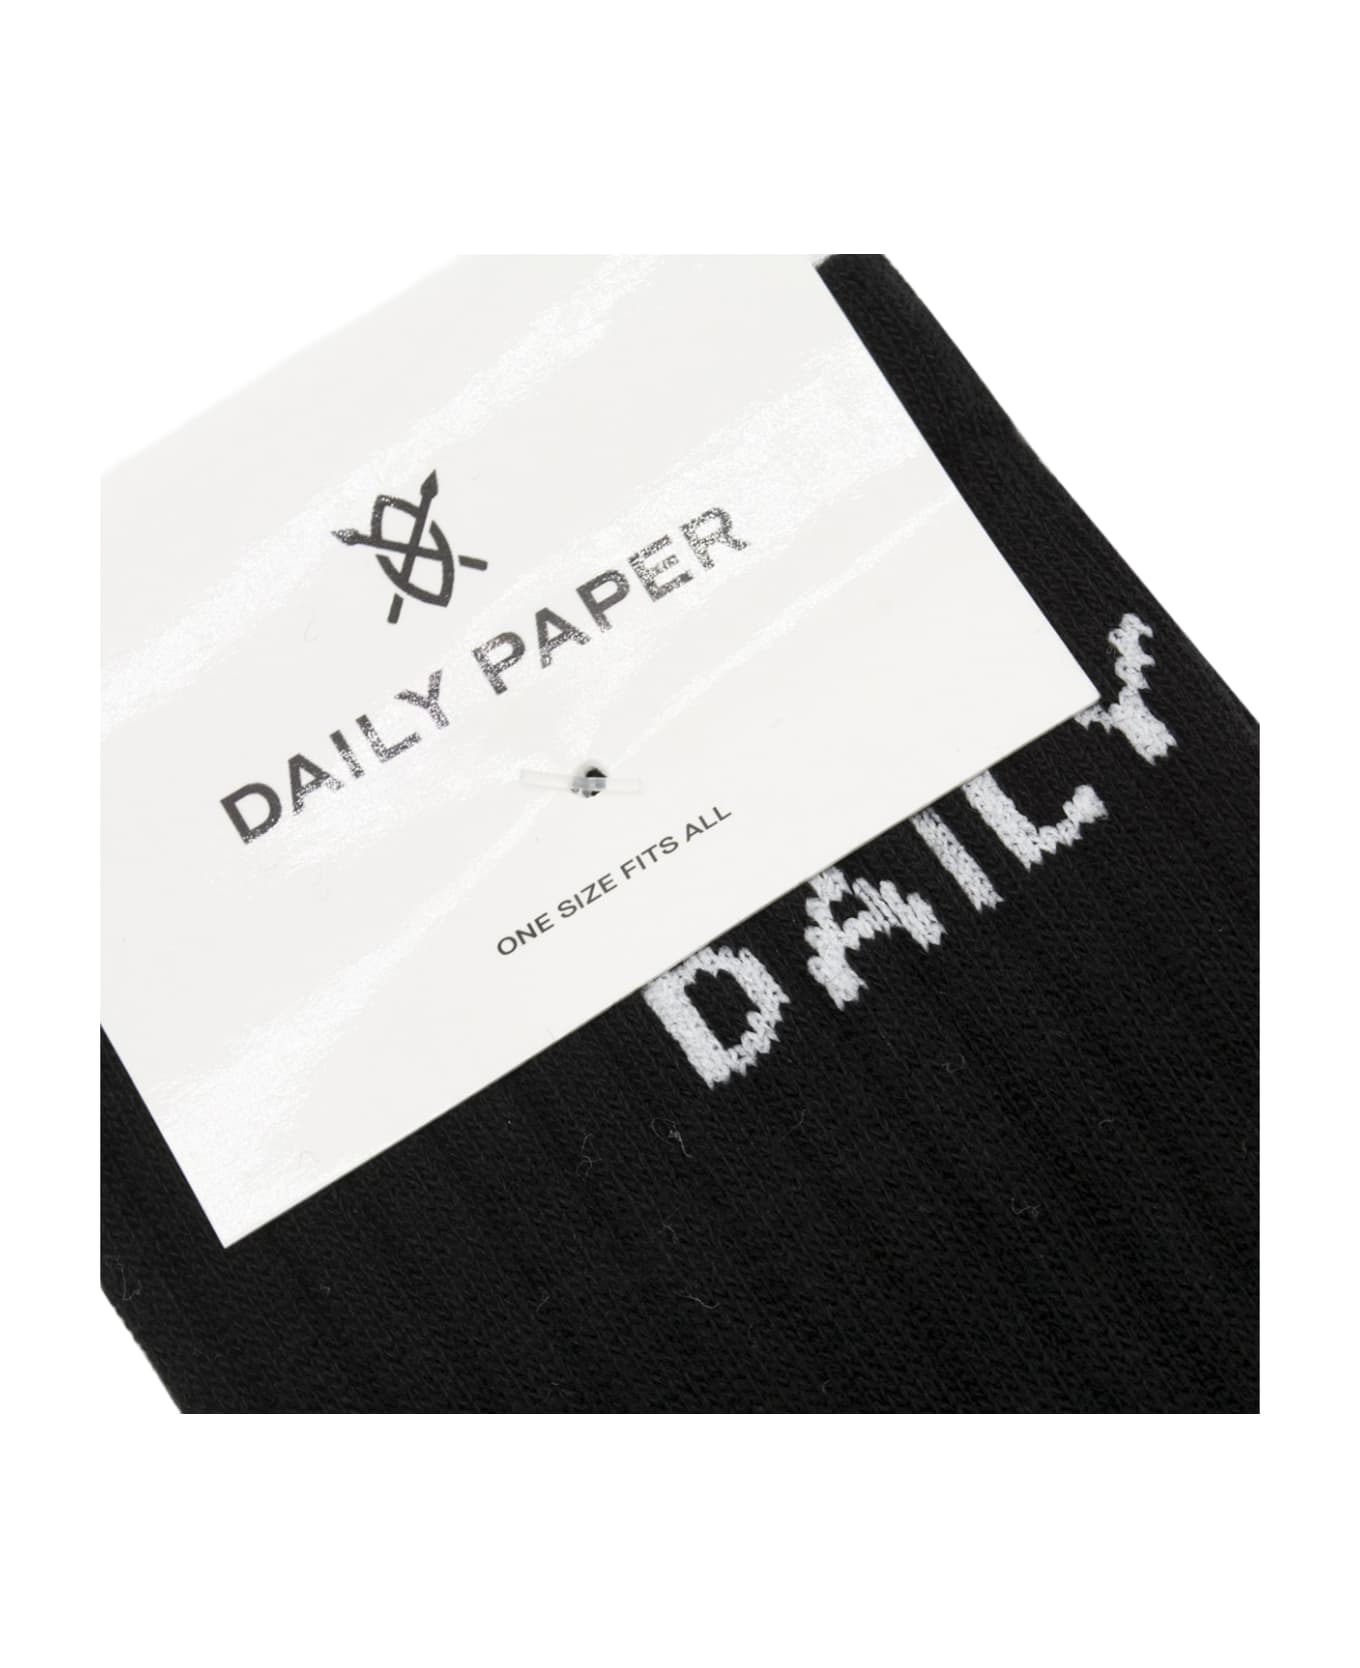 Daily Paper Black And White Cotton Blend Socks - Black